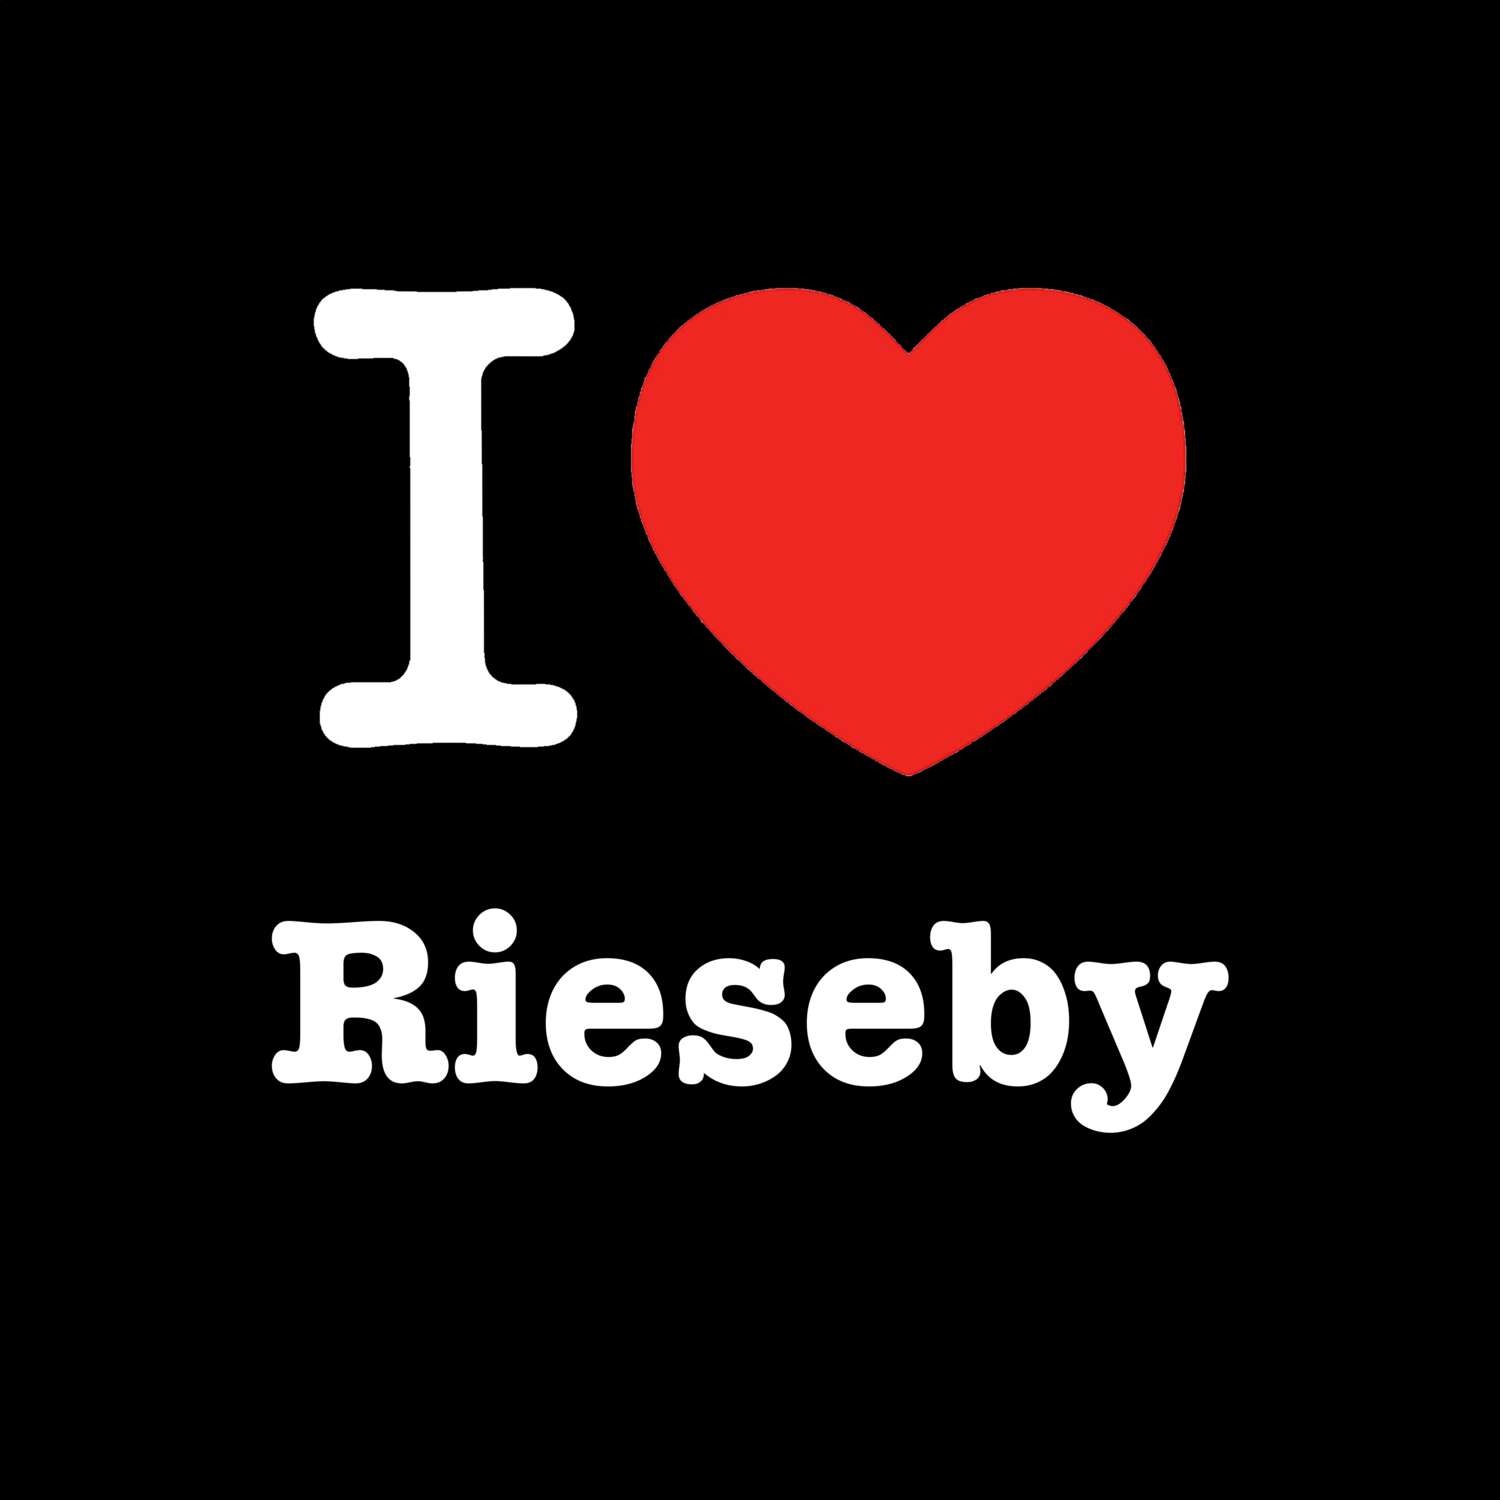 Rieseby T-Shirt »I love«